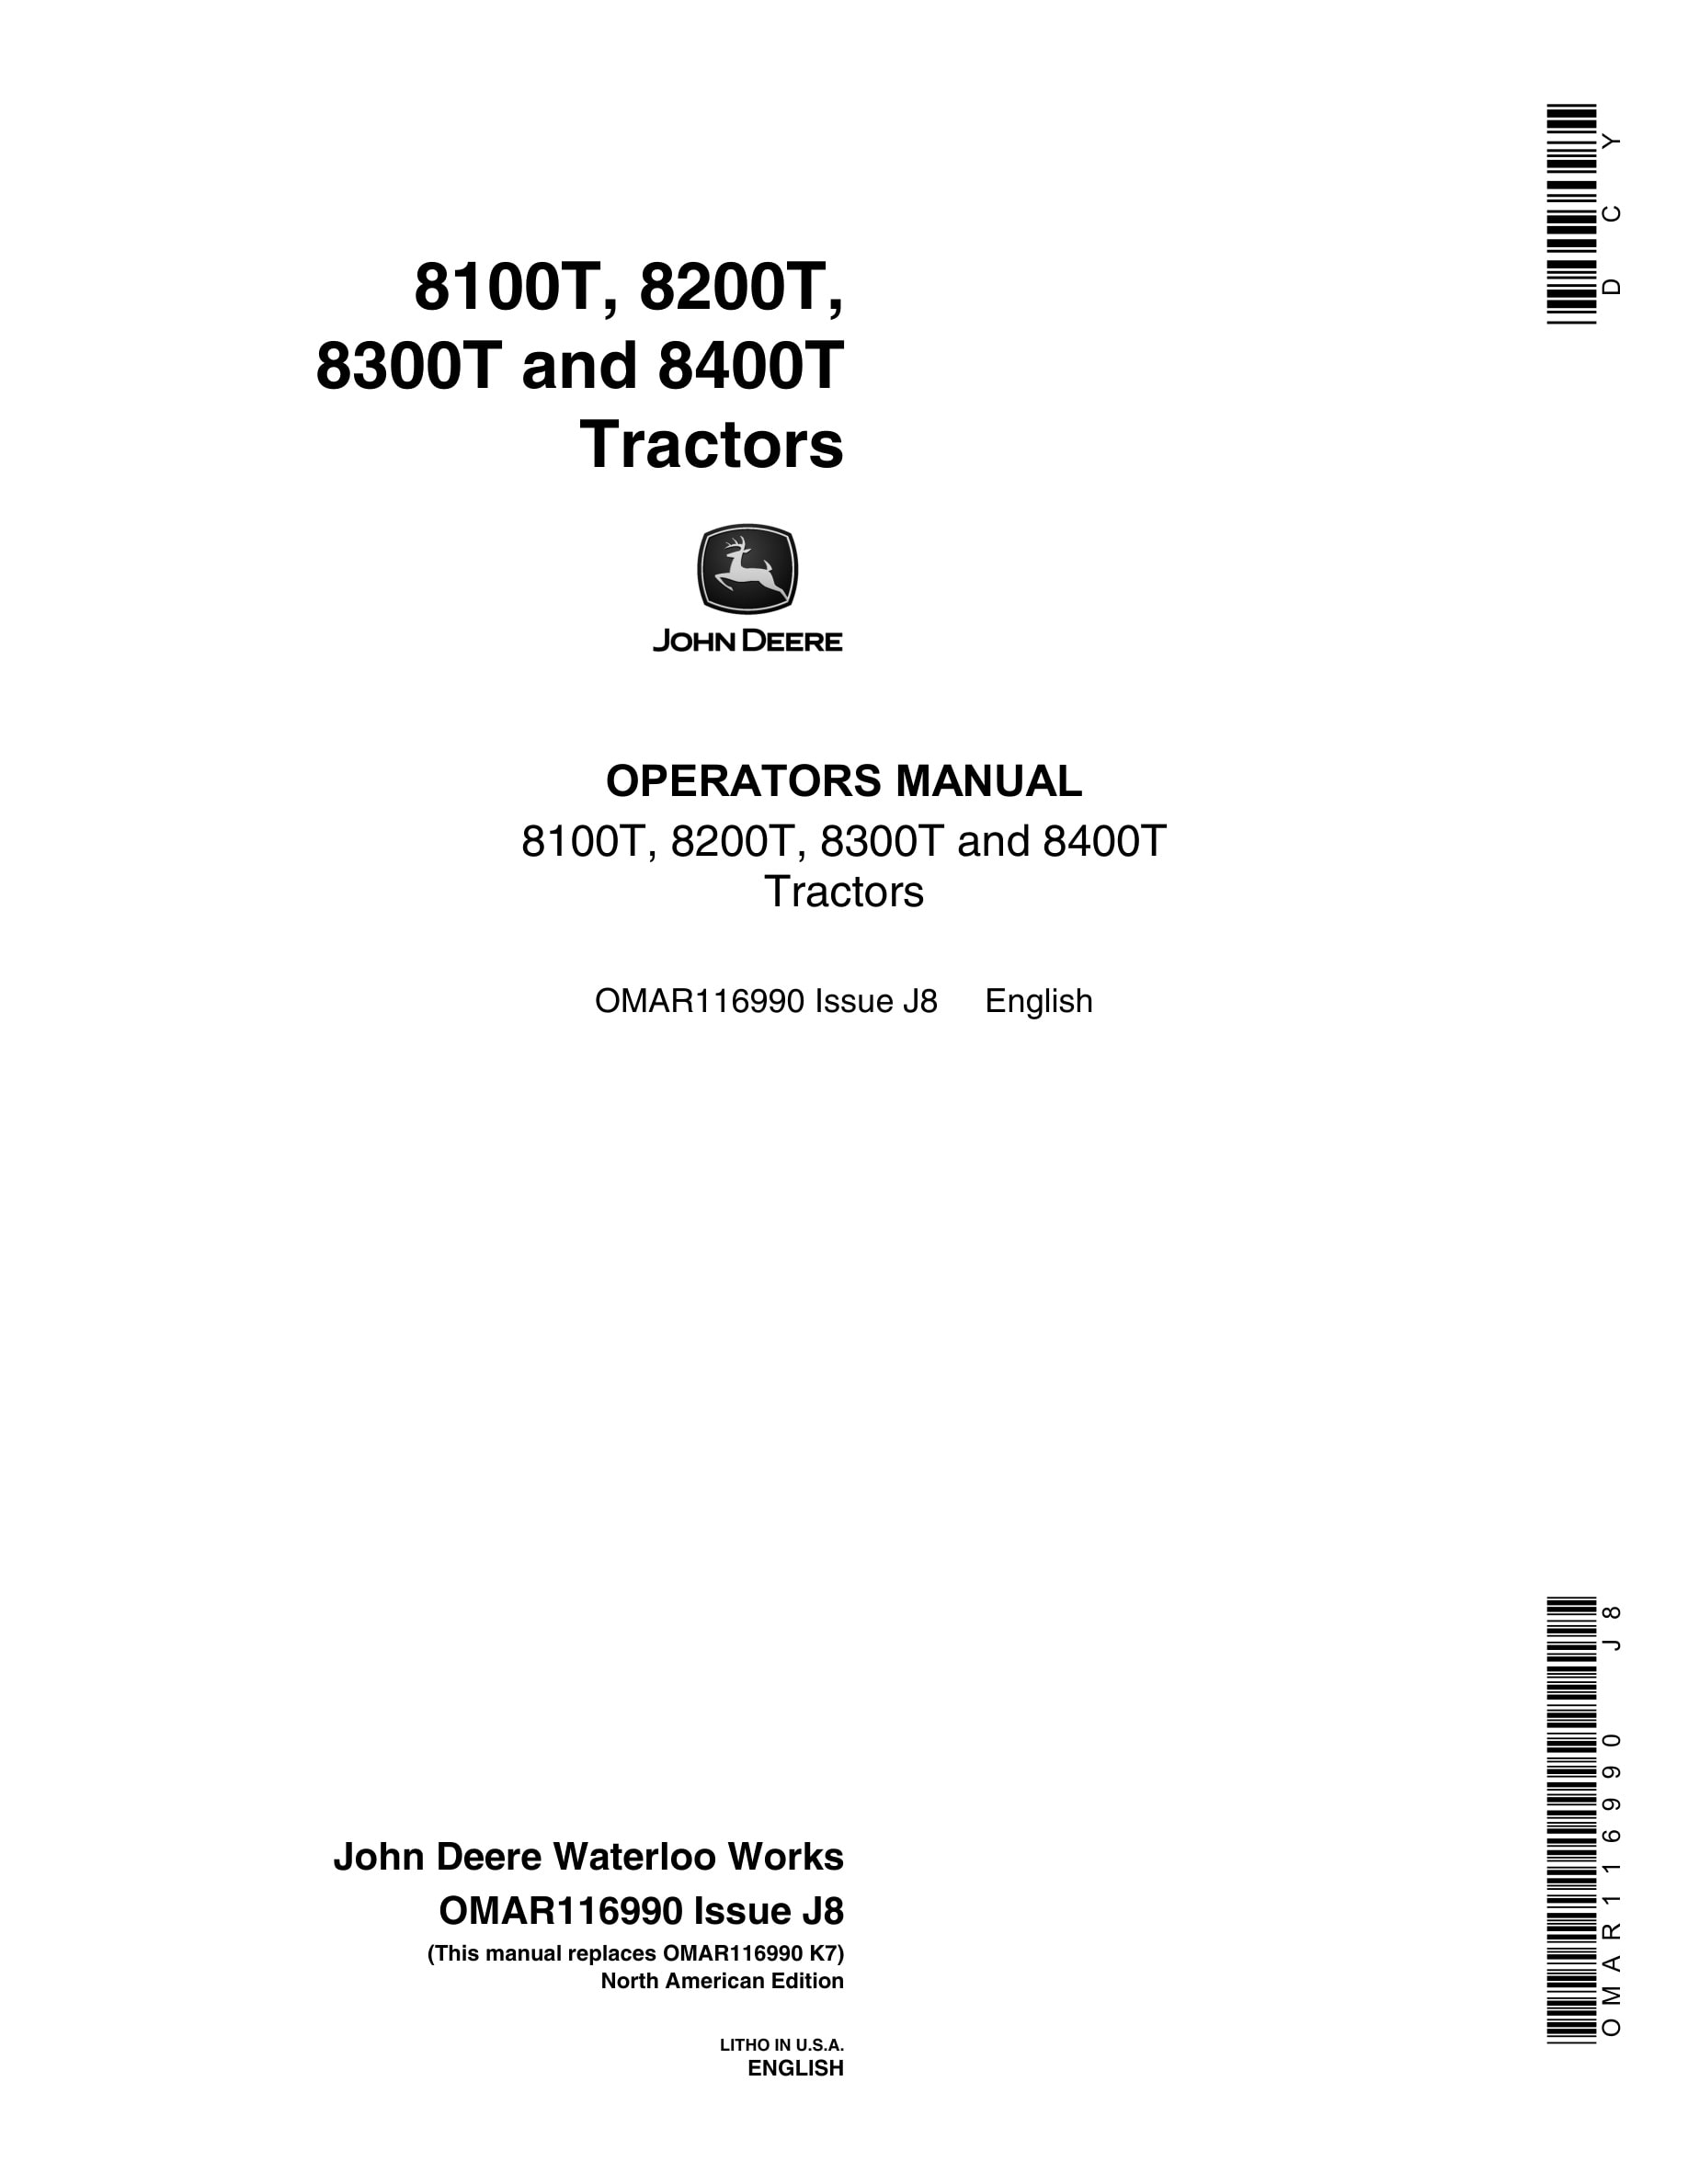 John Deere 8100T, 8200T, 8300T and 8400T Tractor Operator Manual OMAR116990-1